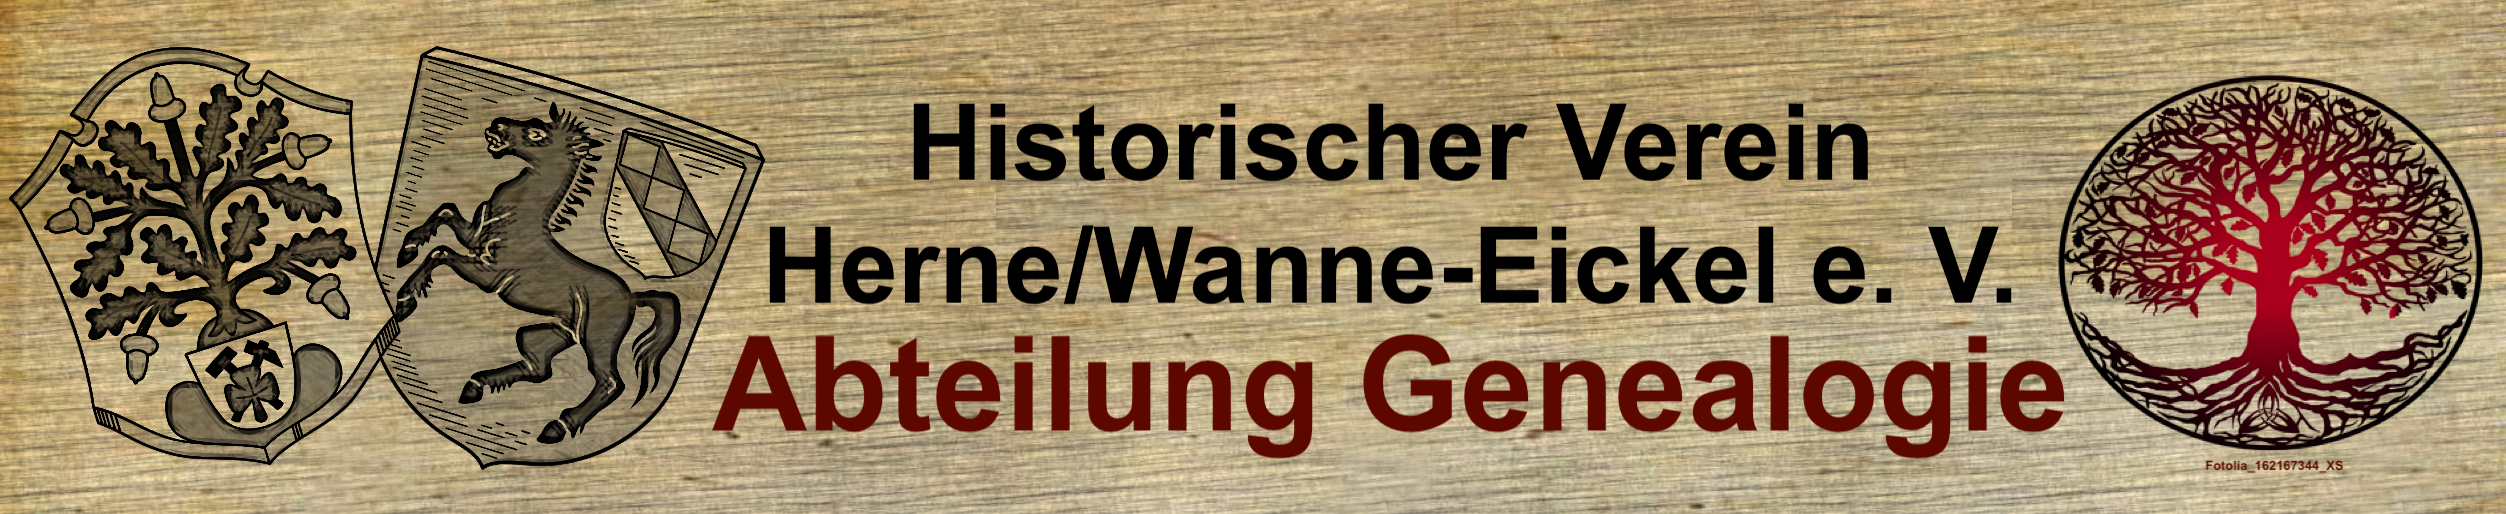 logo2018-Genealogie-Kopie